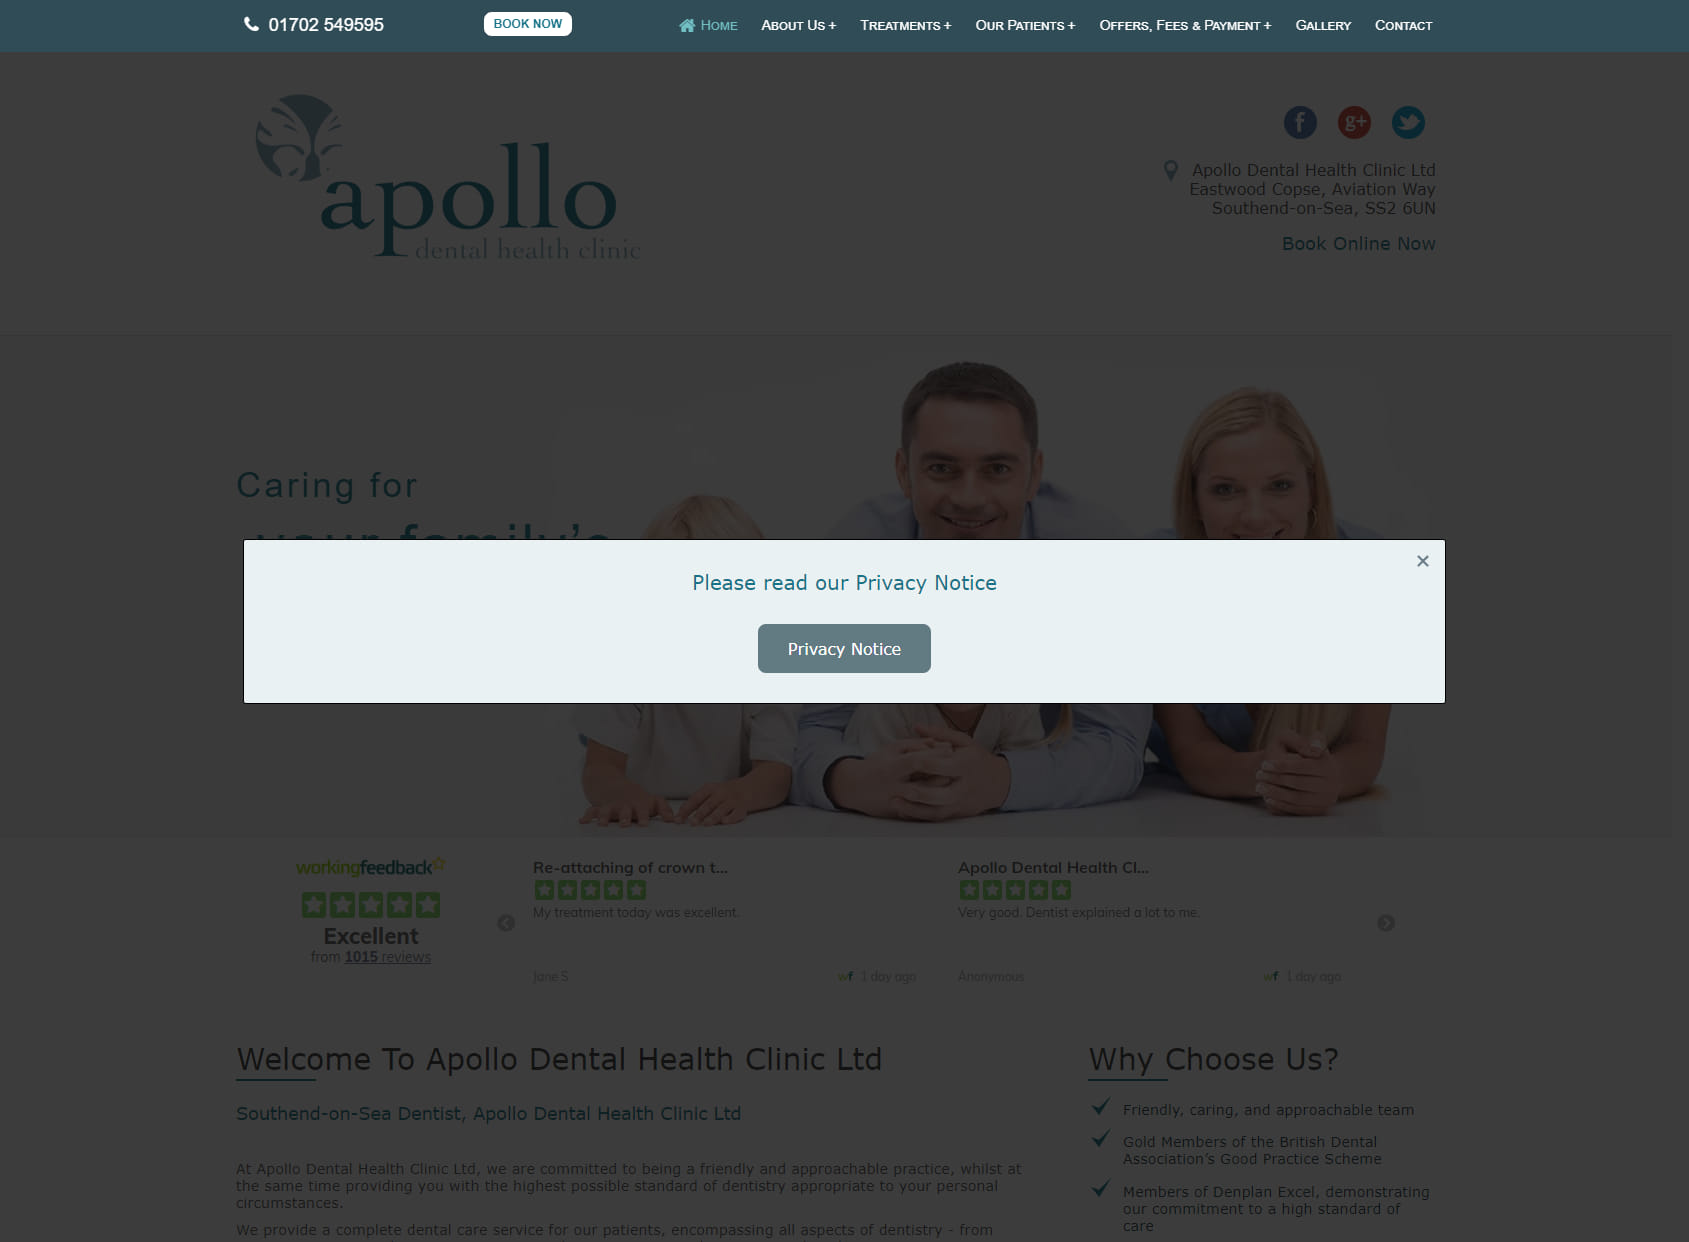 Apollo Dental Health Clinic Ltd.